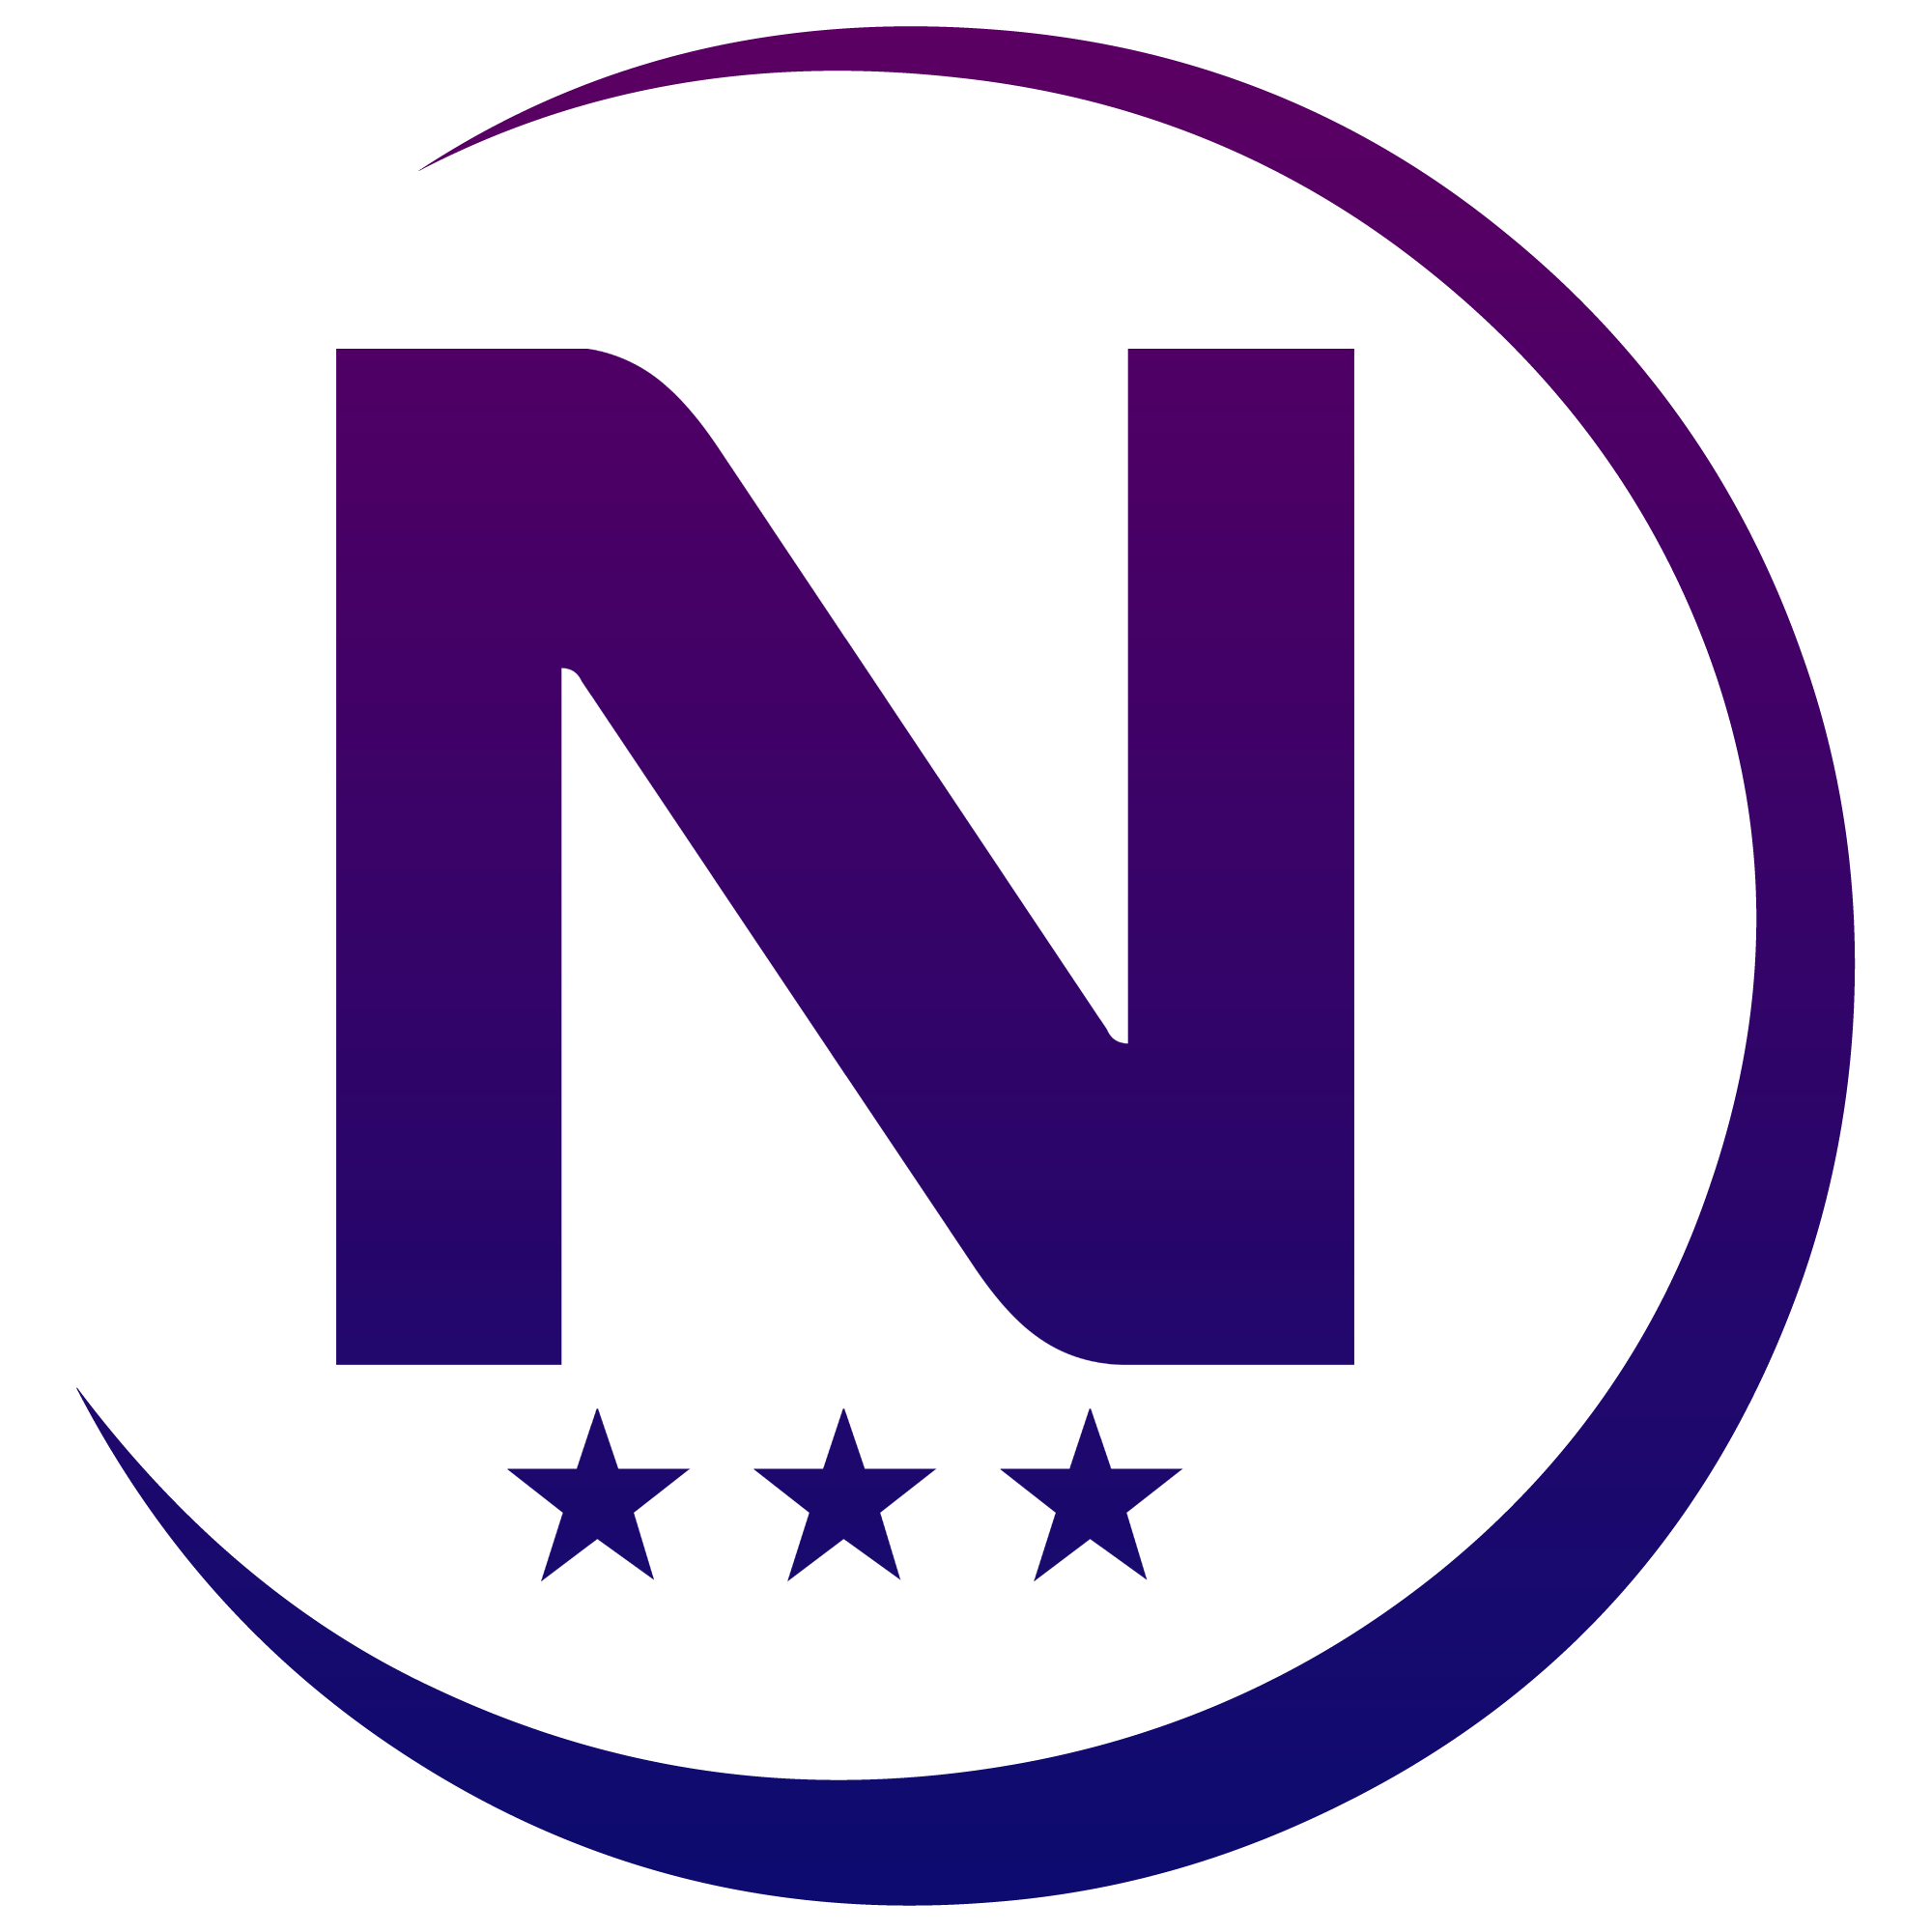 NPP Logo - NPP NATIONAL PROGRESS PARTY LOGO 6.png